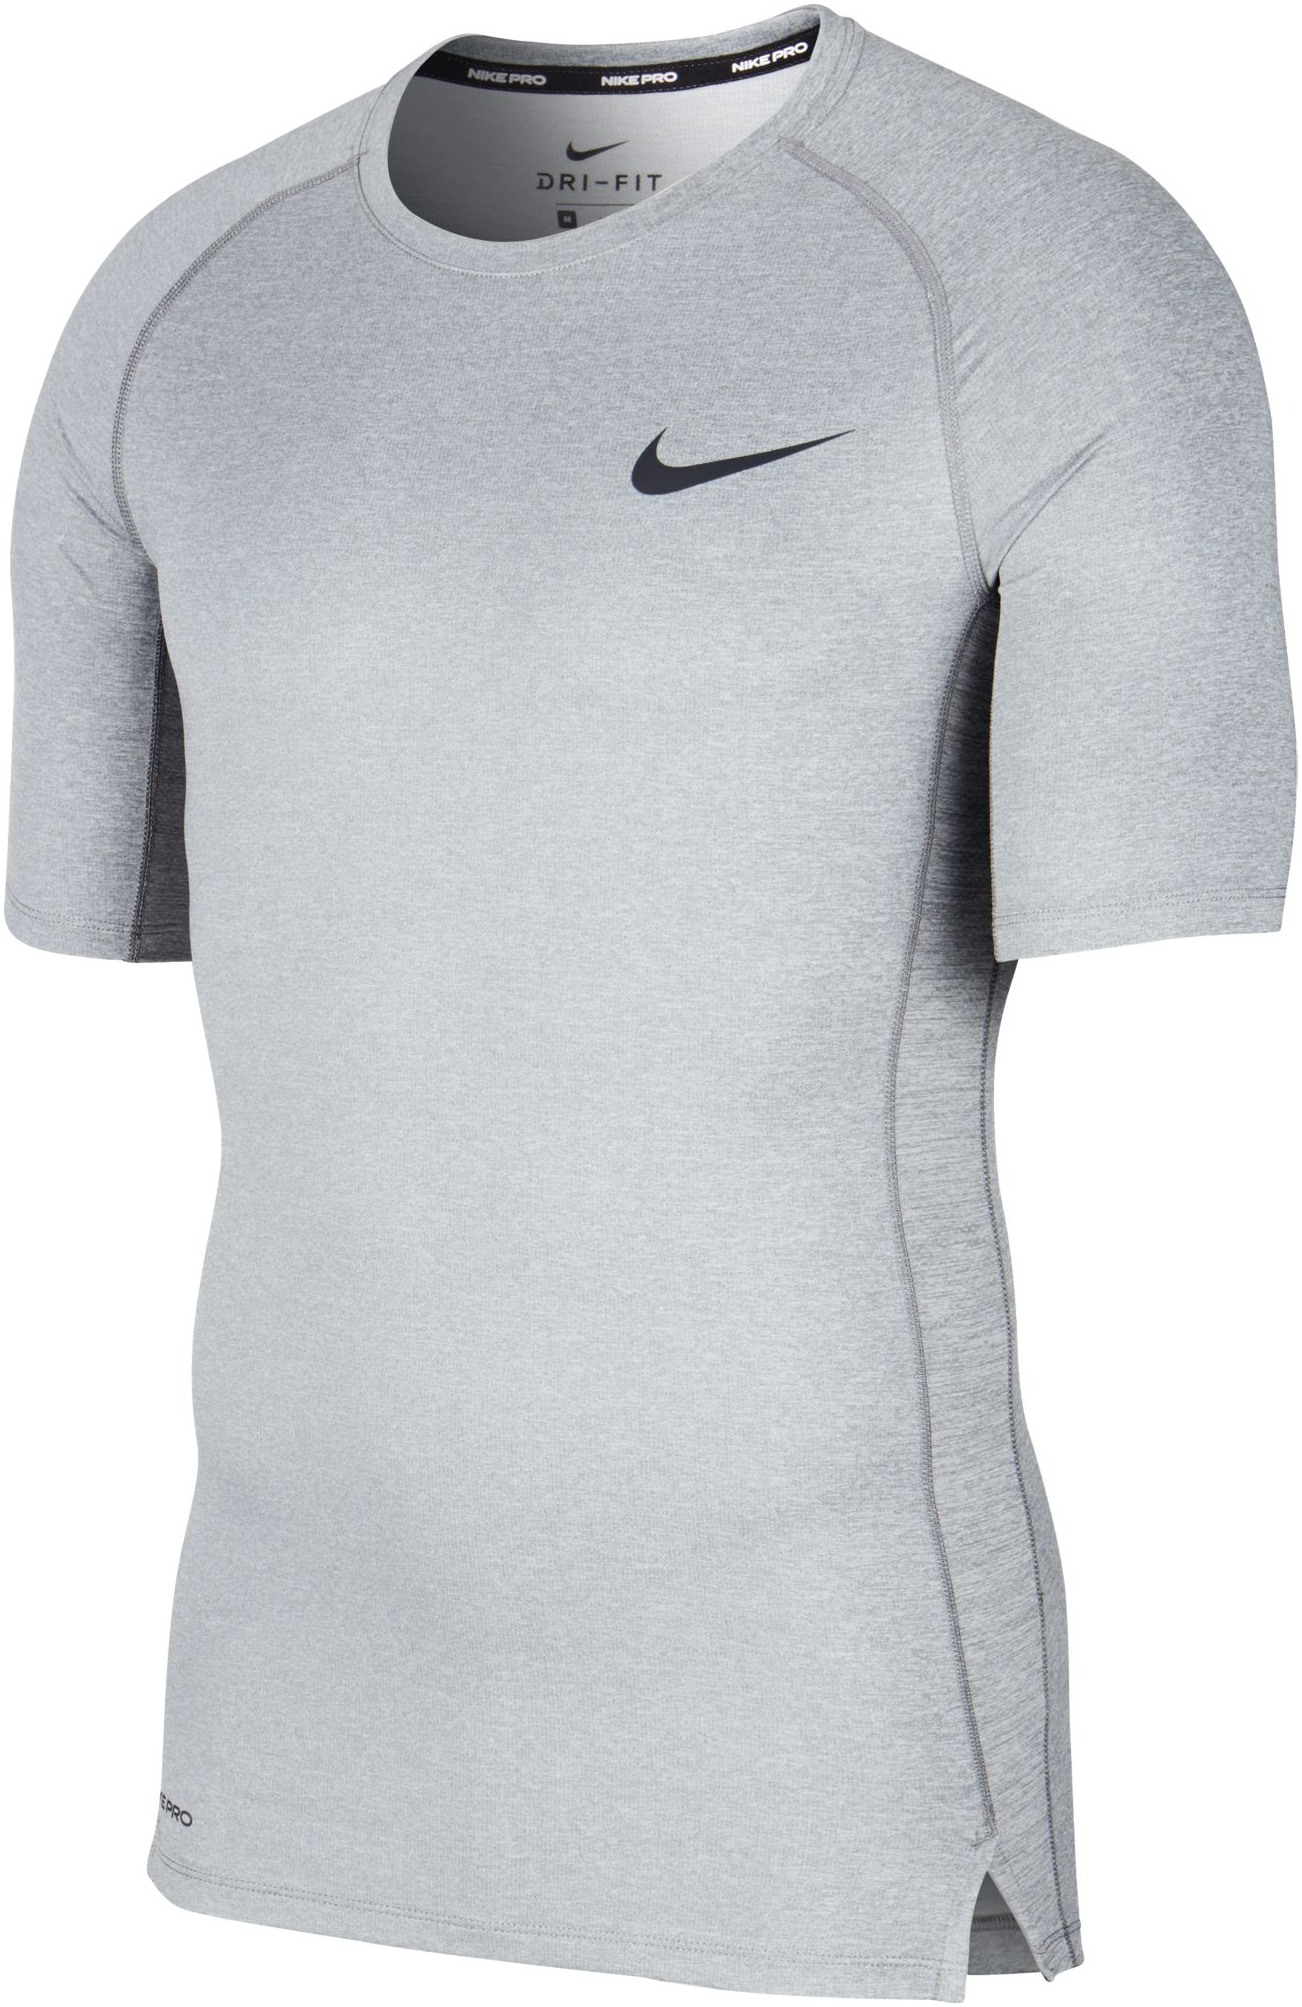 Mens compression short shirt Nike PRO grey | AD Sport.store